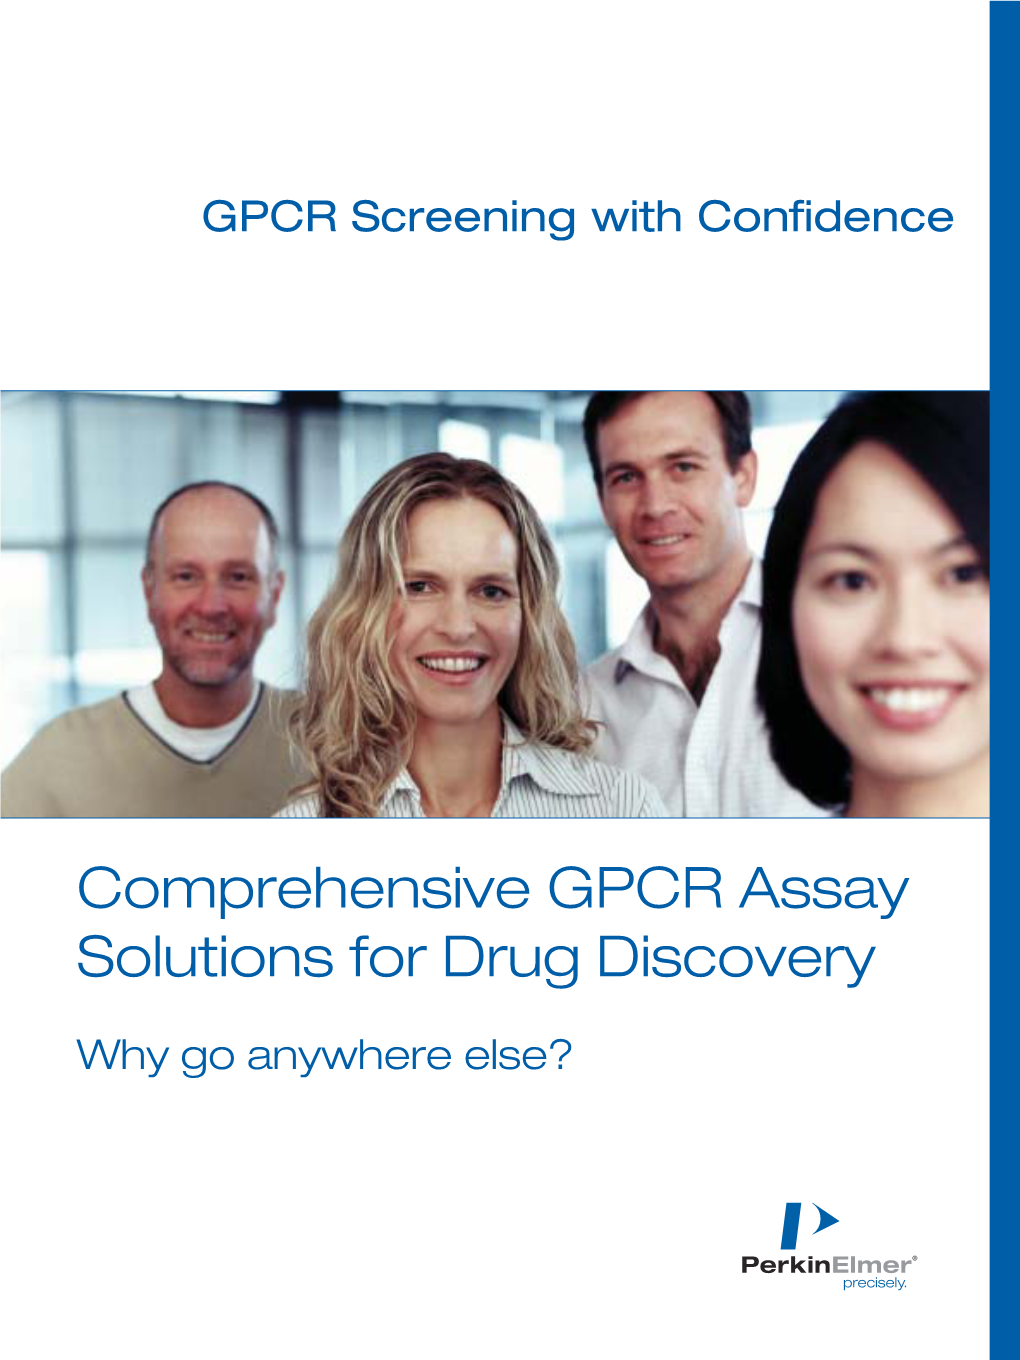 Comprehensive GPCR Assay Solutions for Drug Discovery